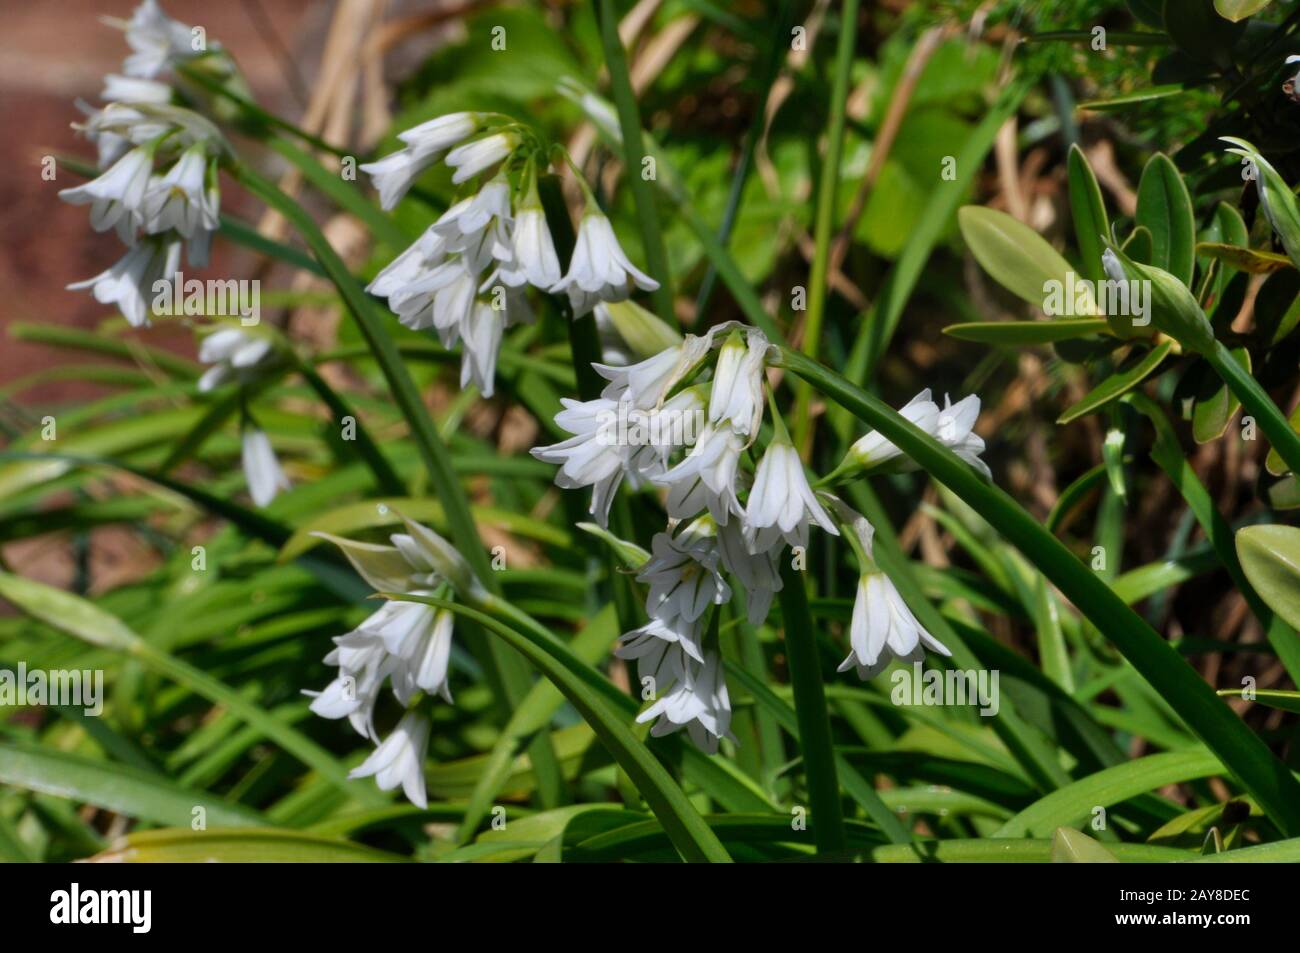 Three cornered Leek,'Allium triquetrum' white flowers , stems with three angles,non-native, invasive, spring in southern England. UK Stock Photo